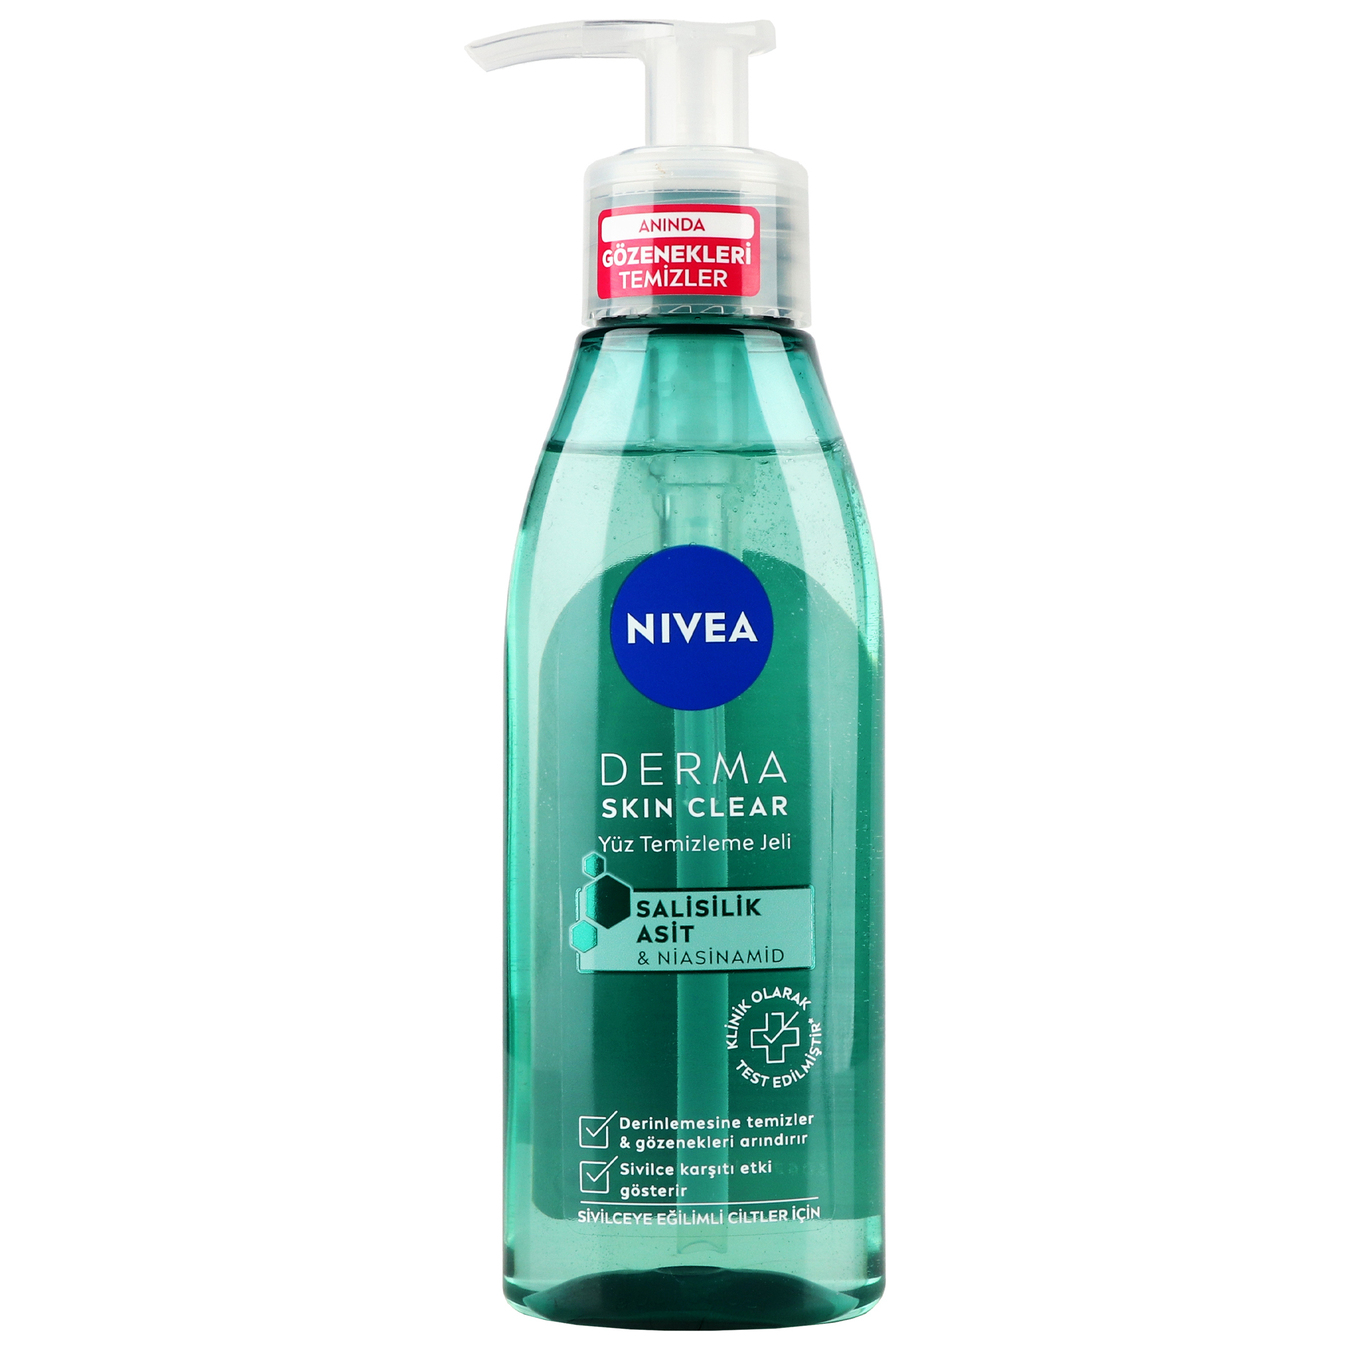 Nivea derma skin clear cleansing face gel 150 ml